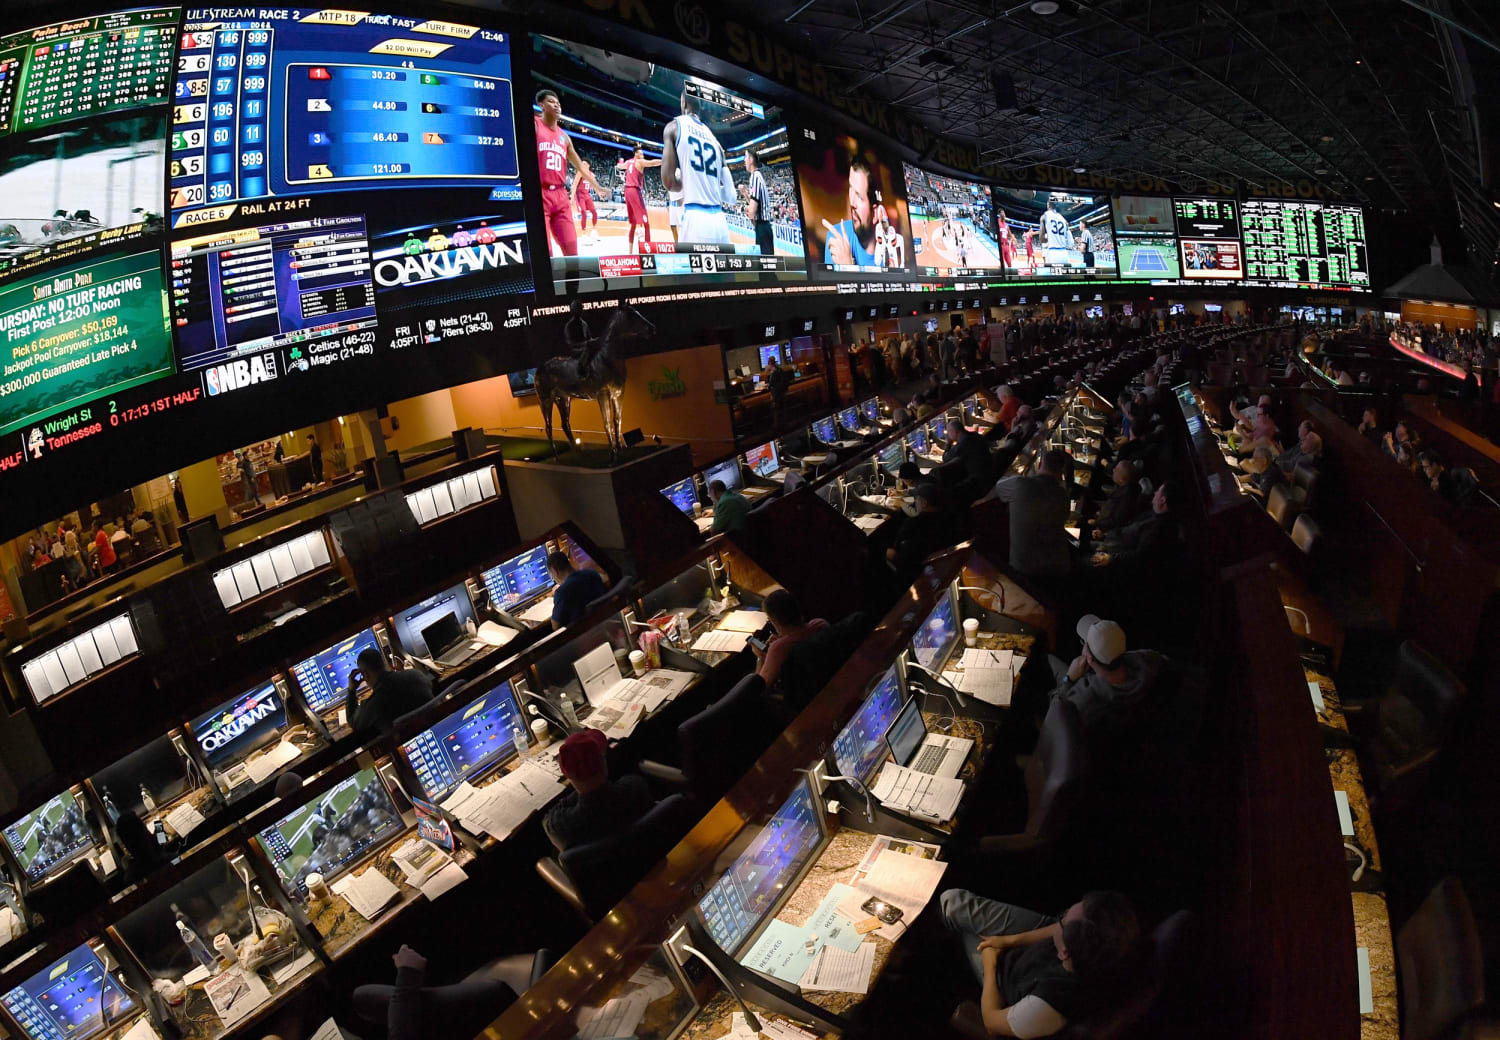 Best sports betting casino in vegas